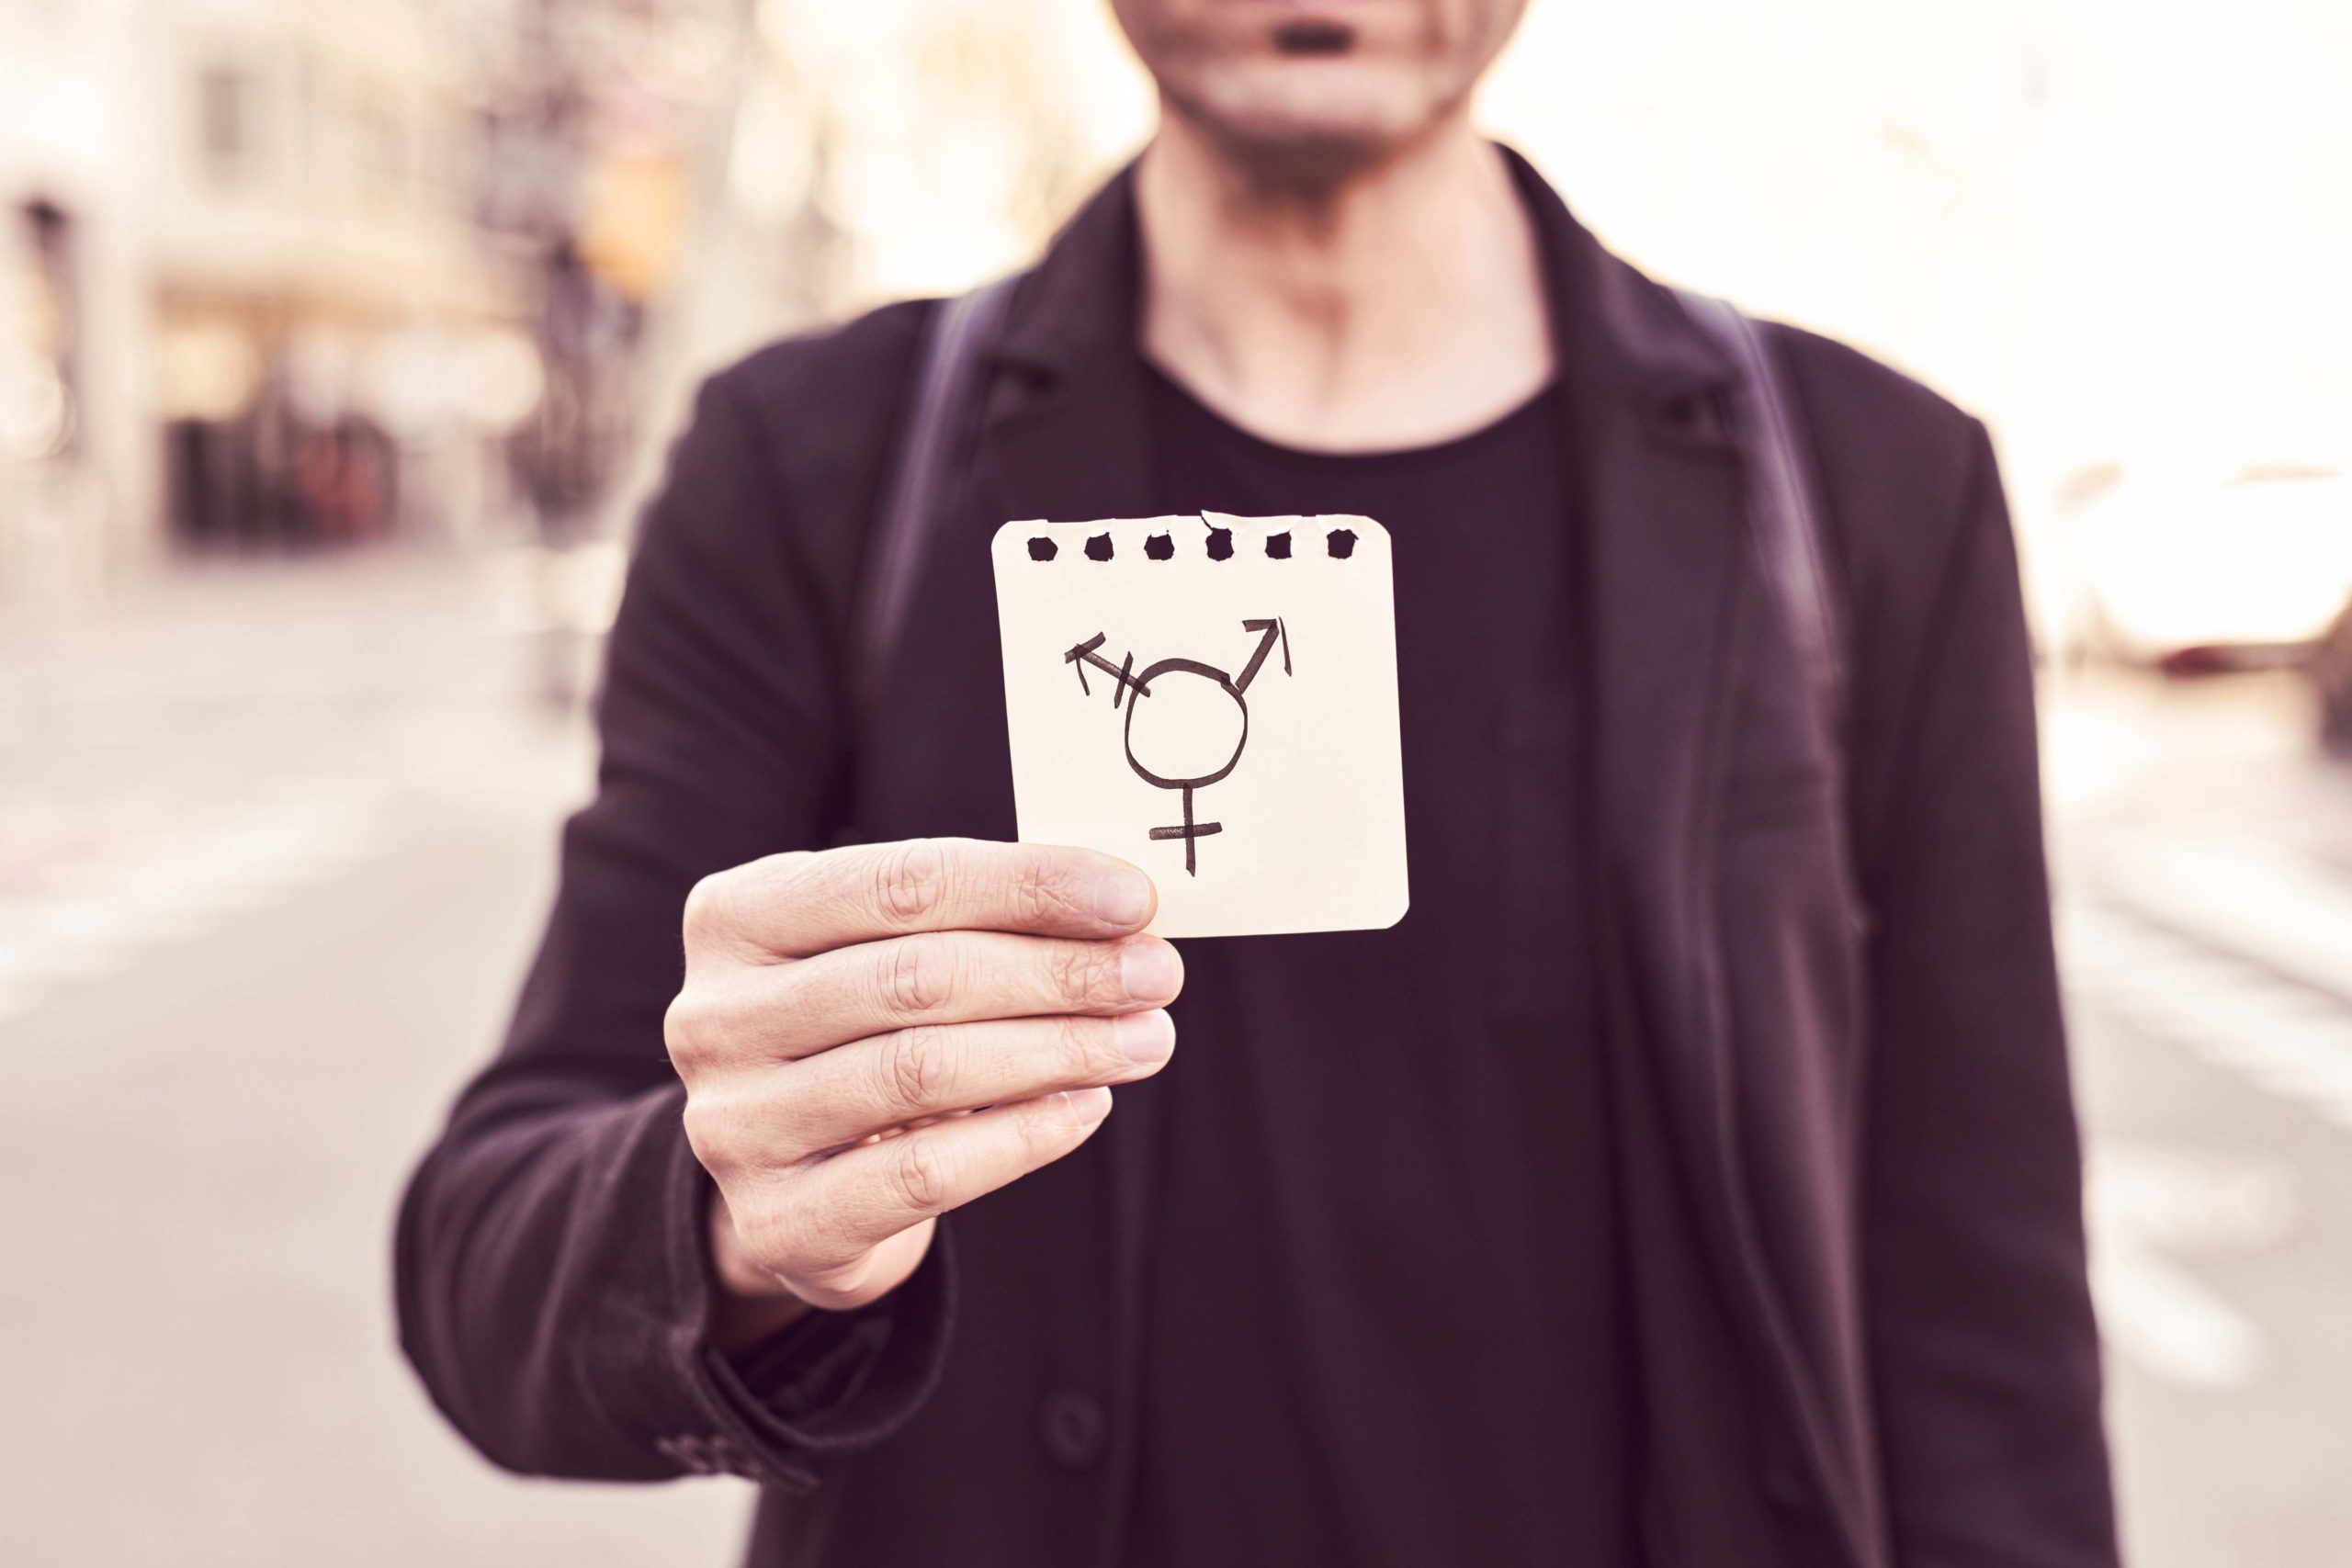 Mann mit Transgender Symbol